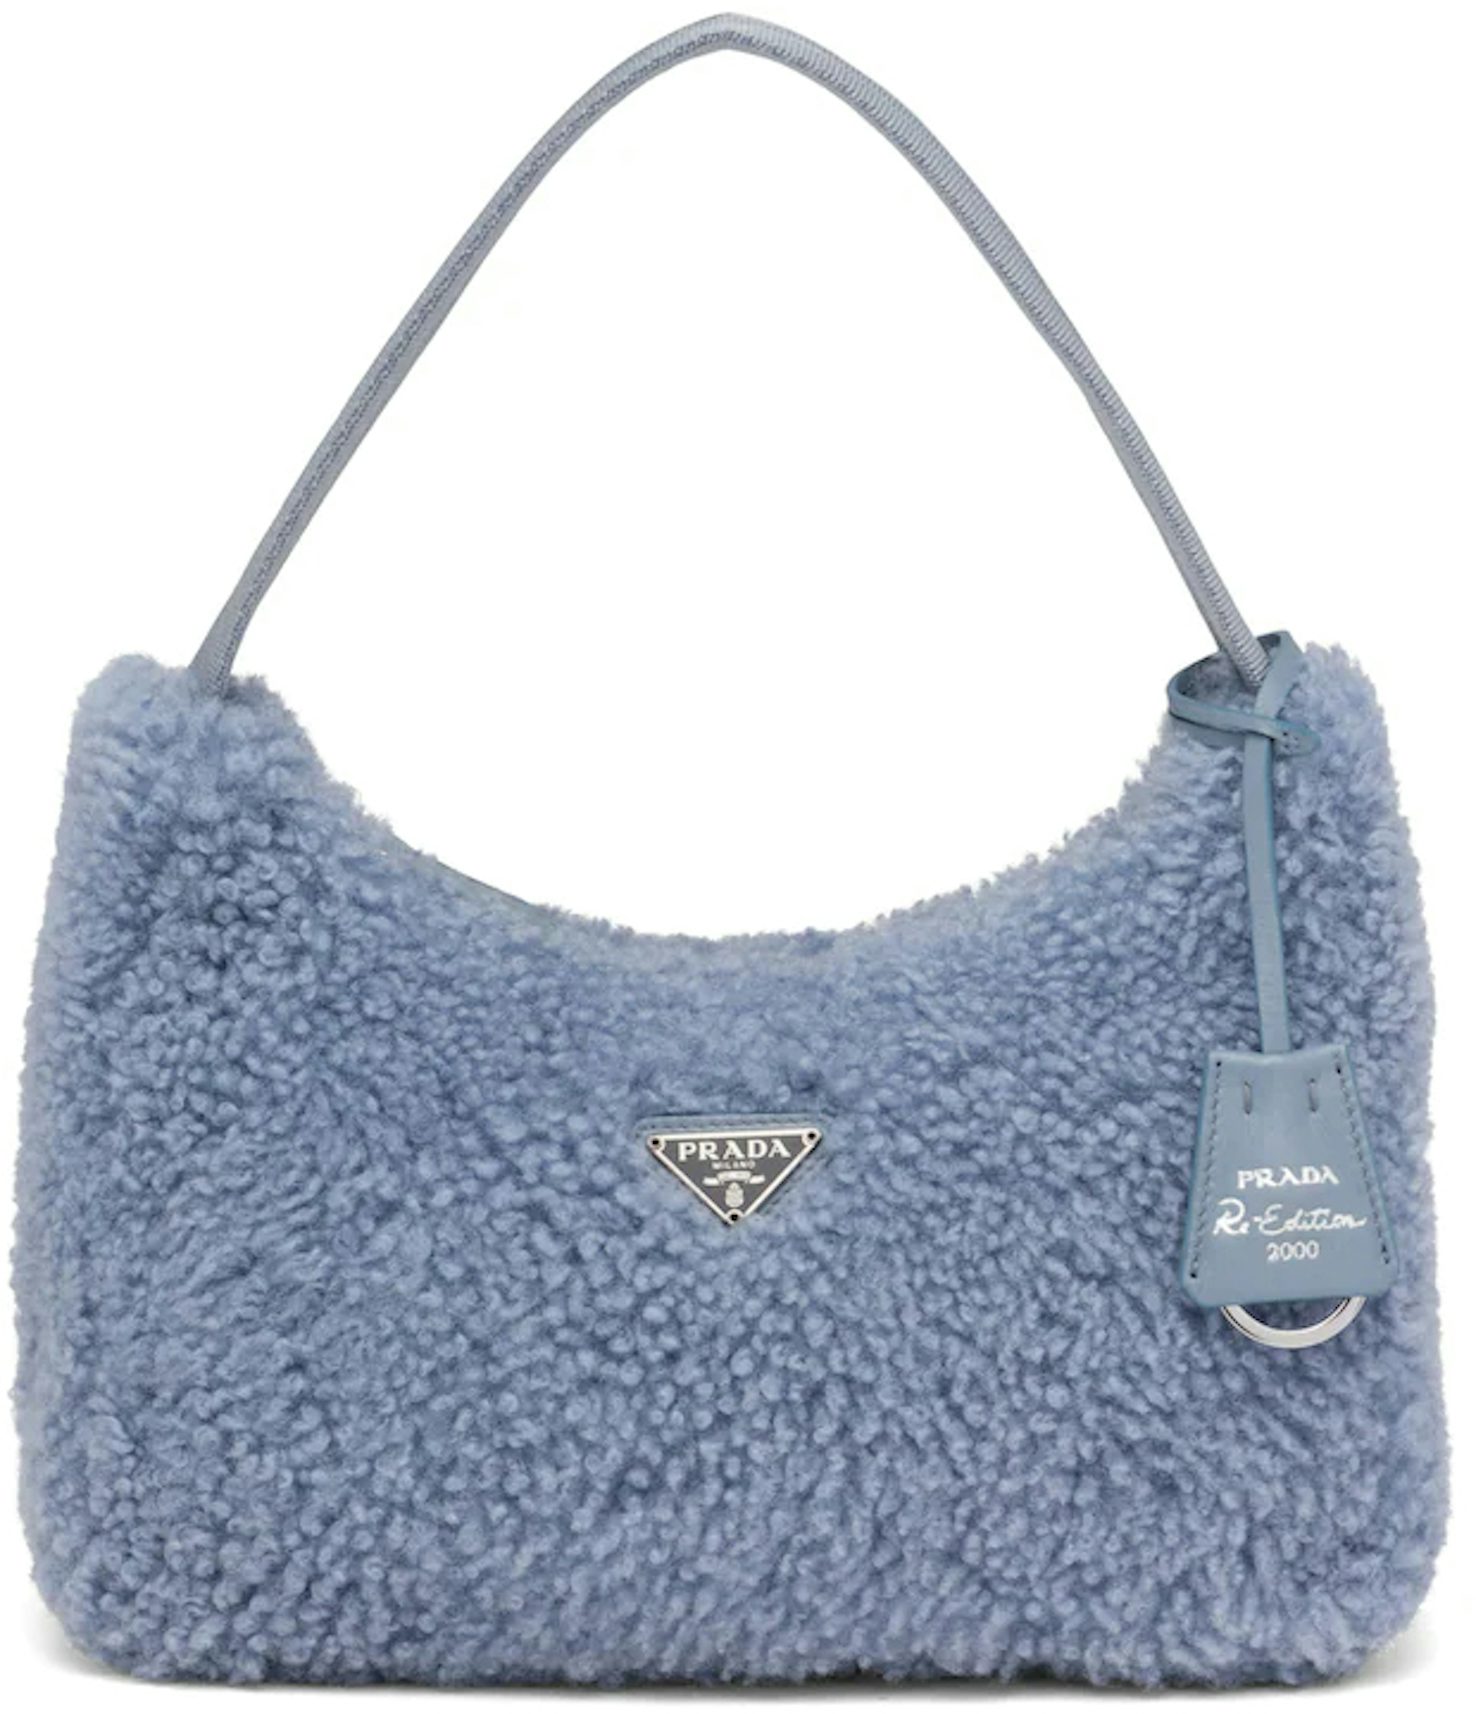 Prada Re-edition 2000 Nylon Mini Bag in Blue